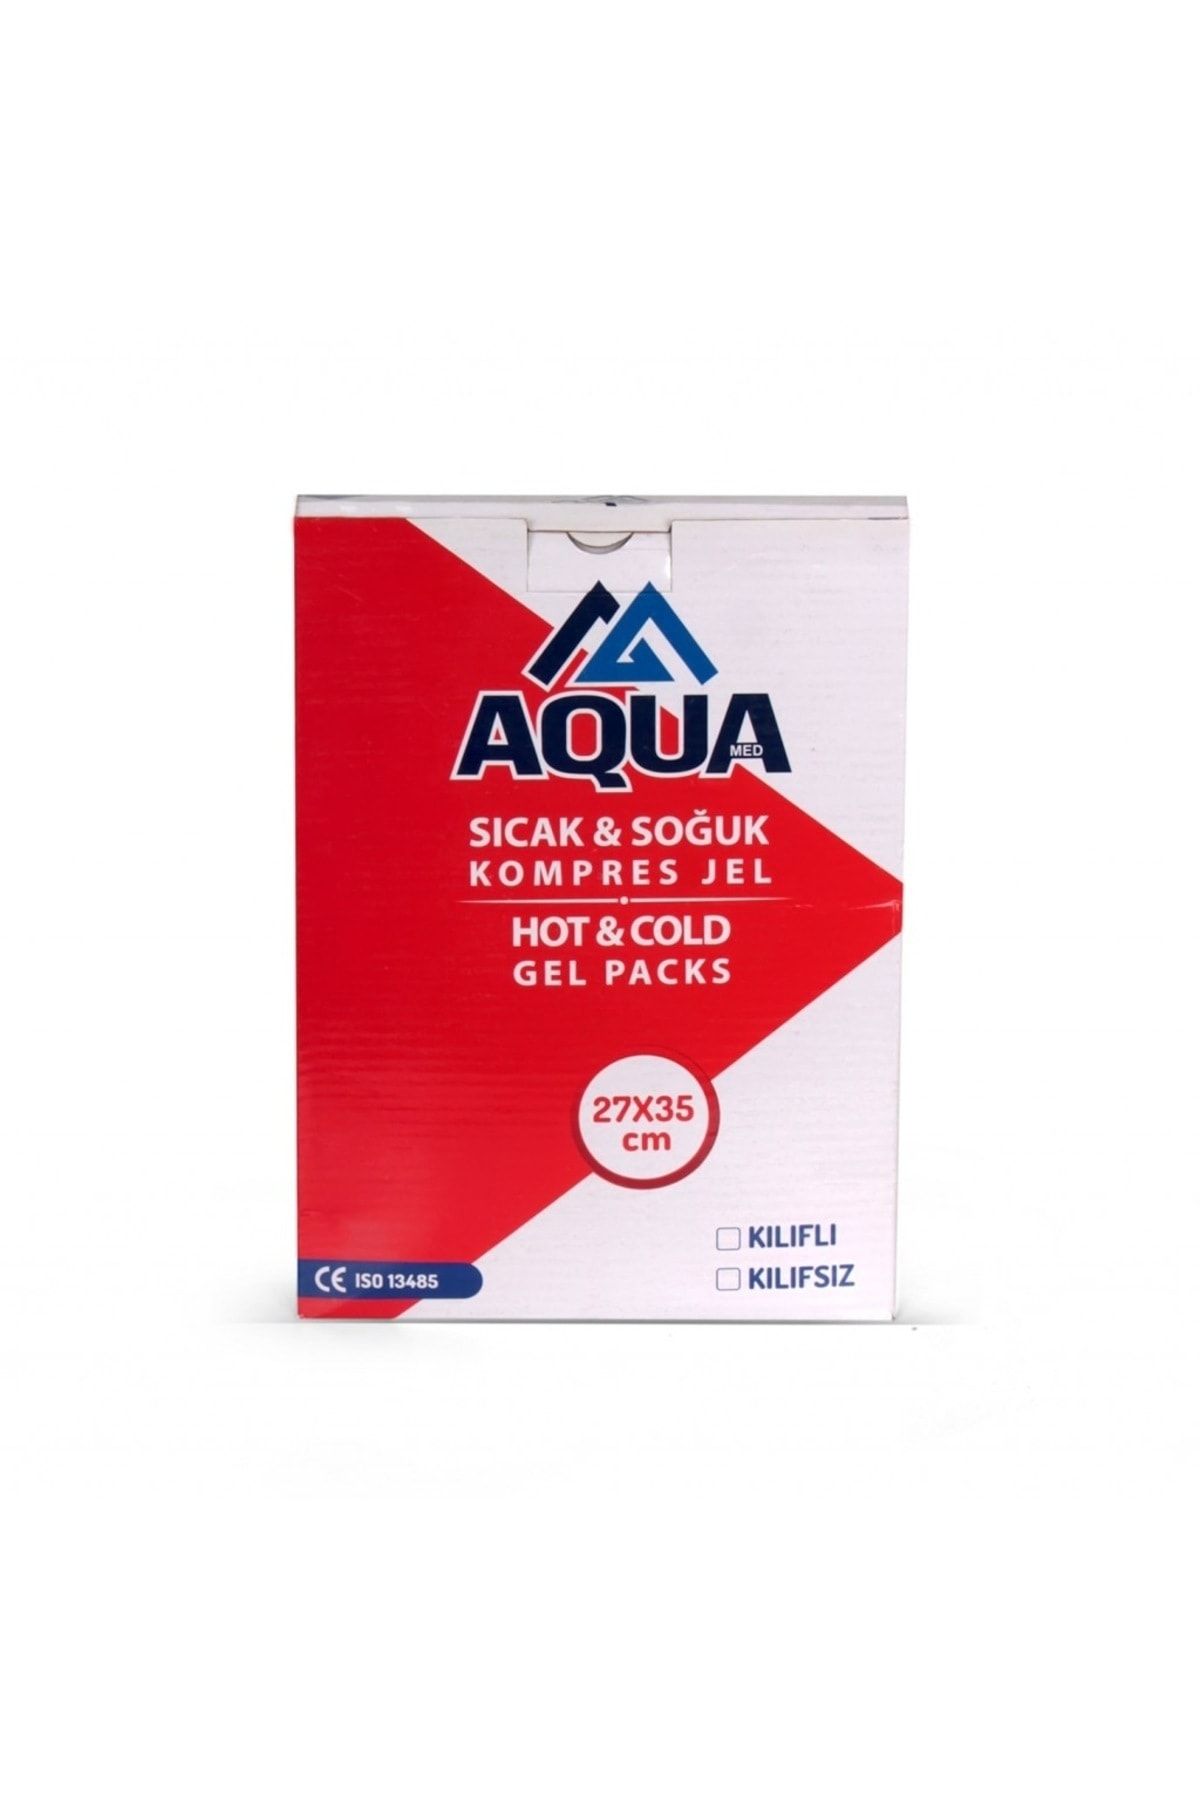 Aqua Sıcak Soğuk Kompres Jel 26*35 1 Adet Kılıfsız